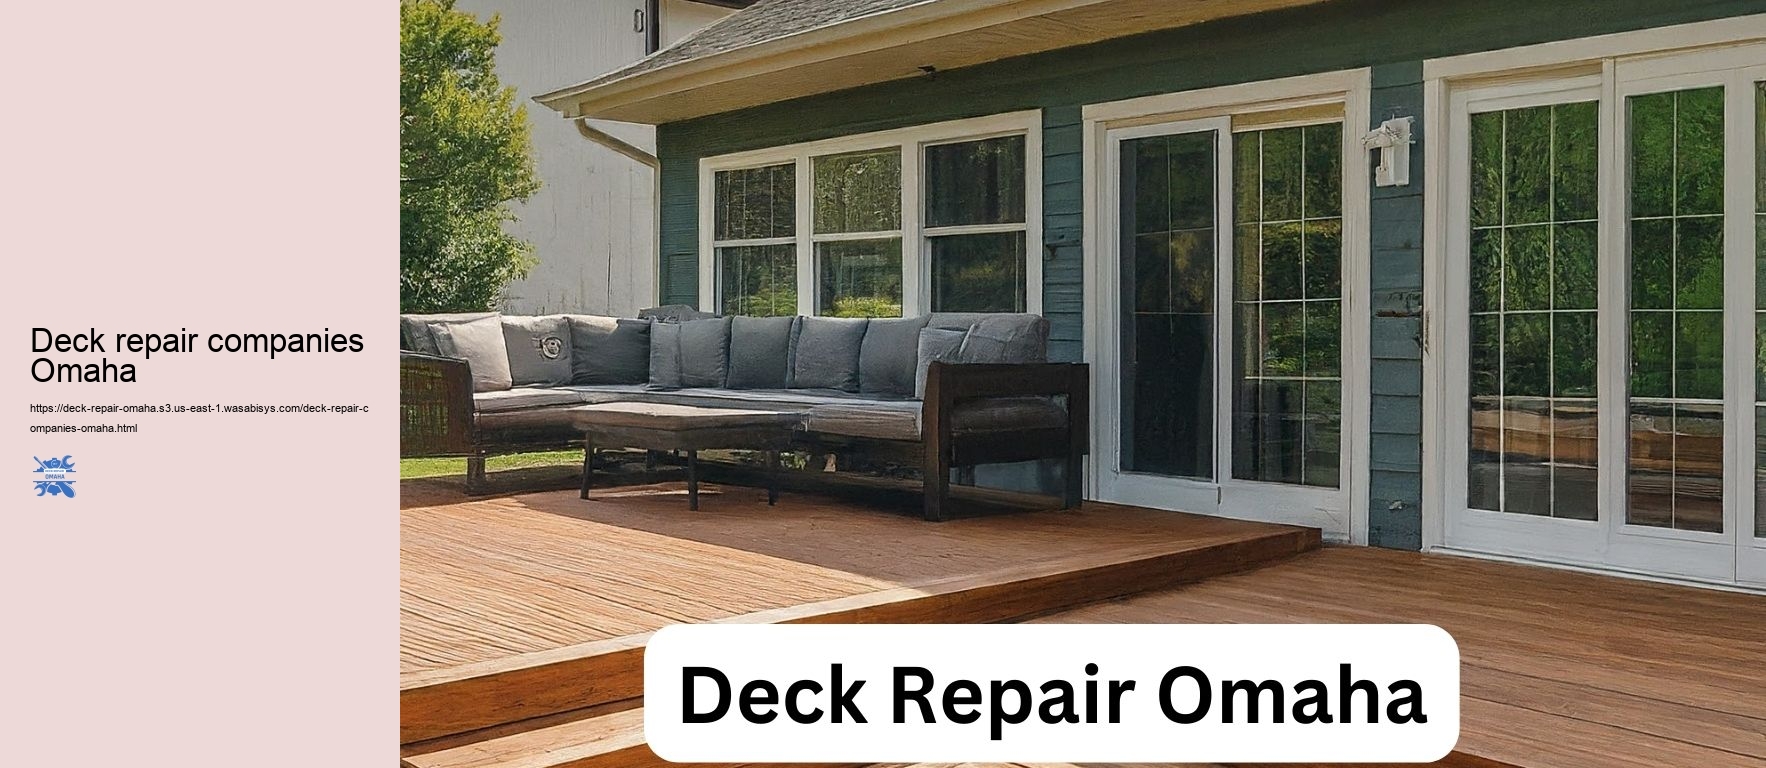 Deck repair companies Omaha